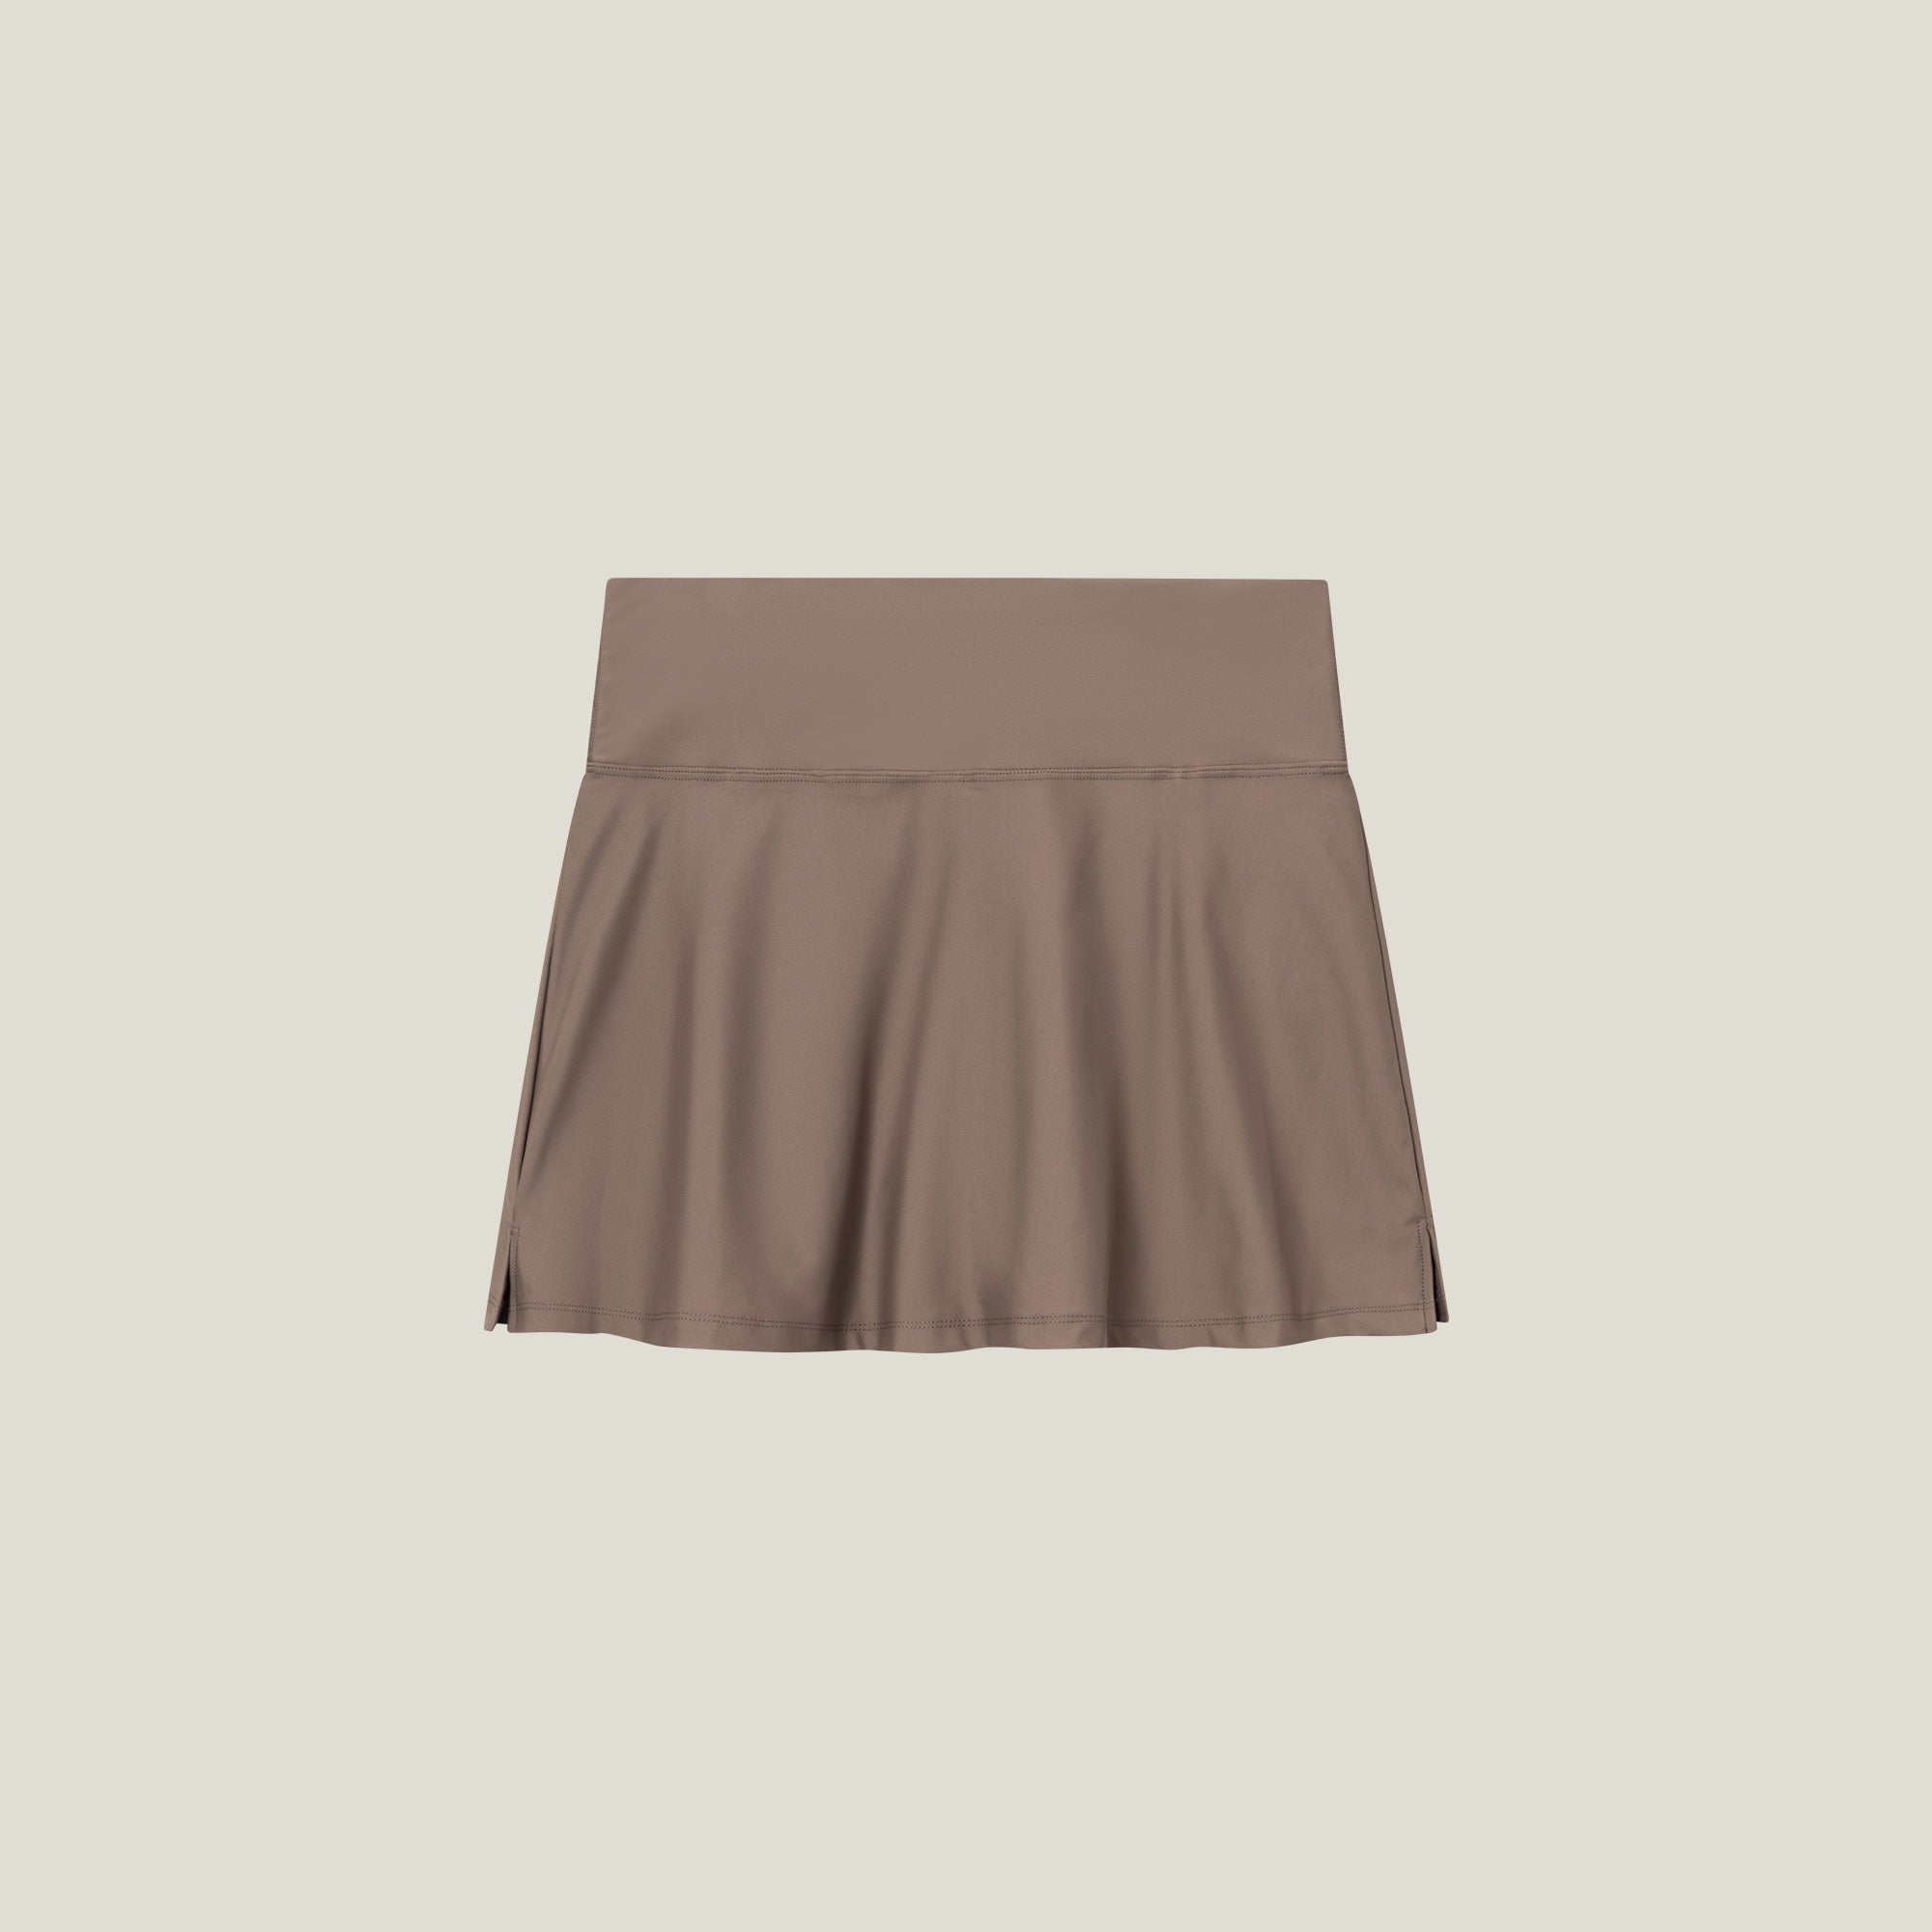 Oncourt Globe Skirt - Brown